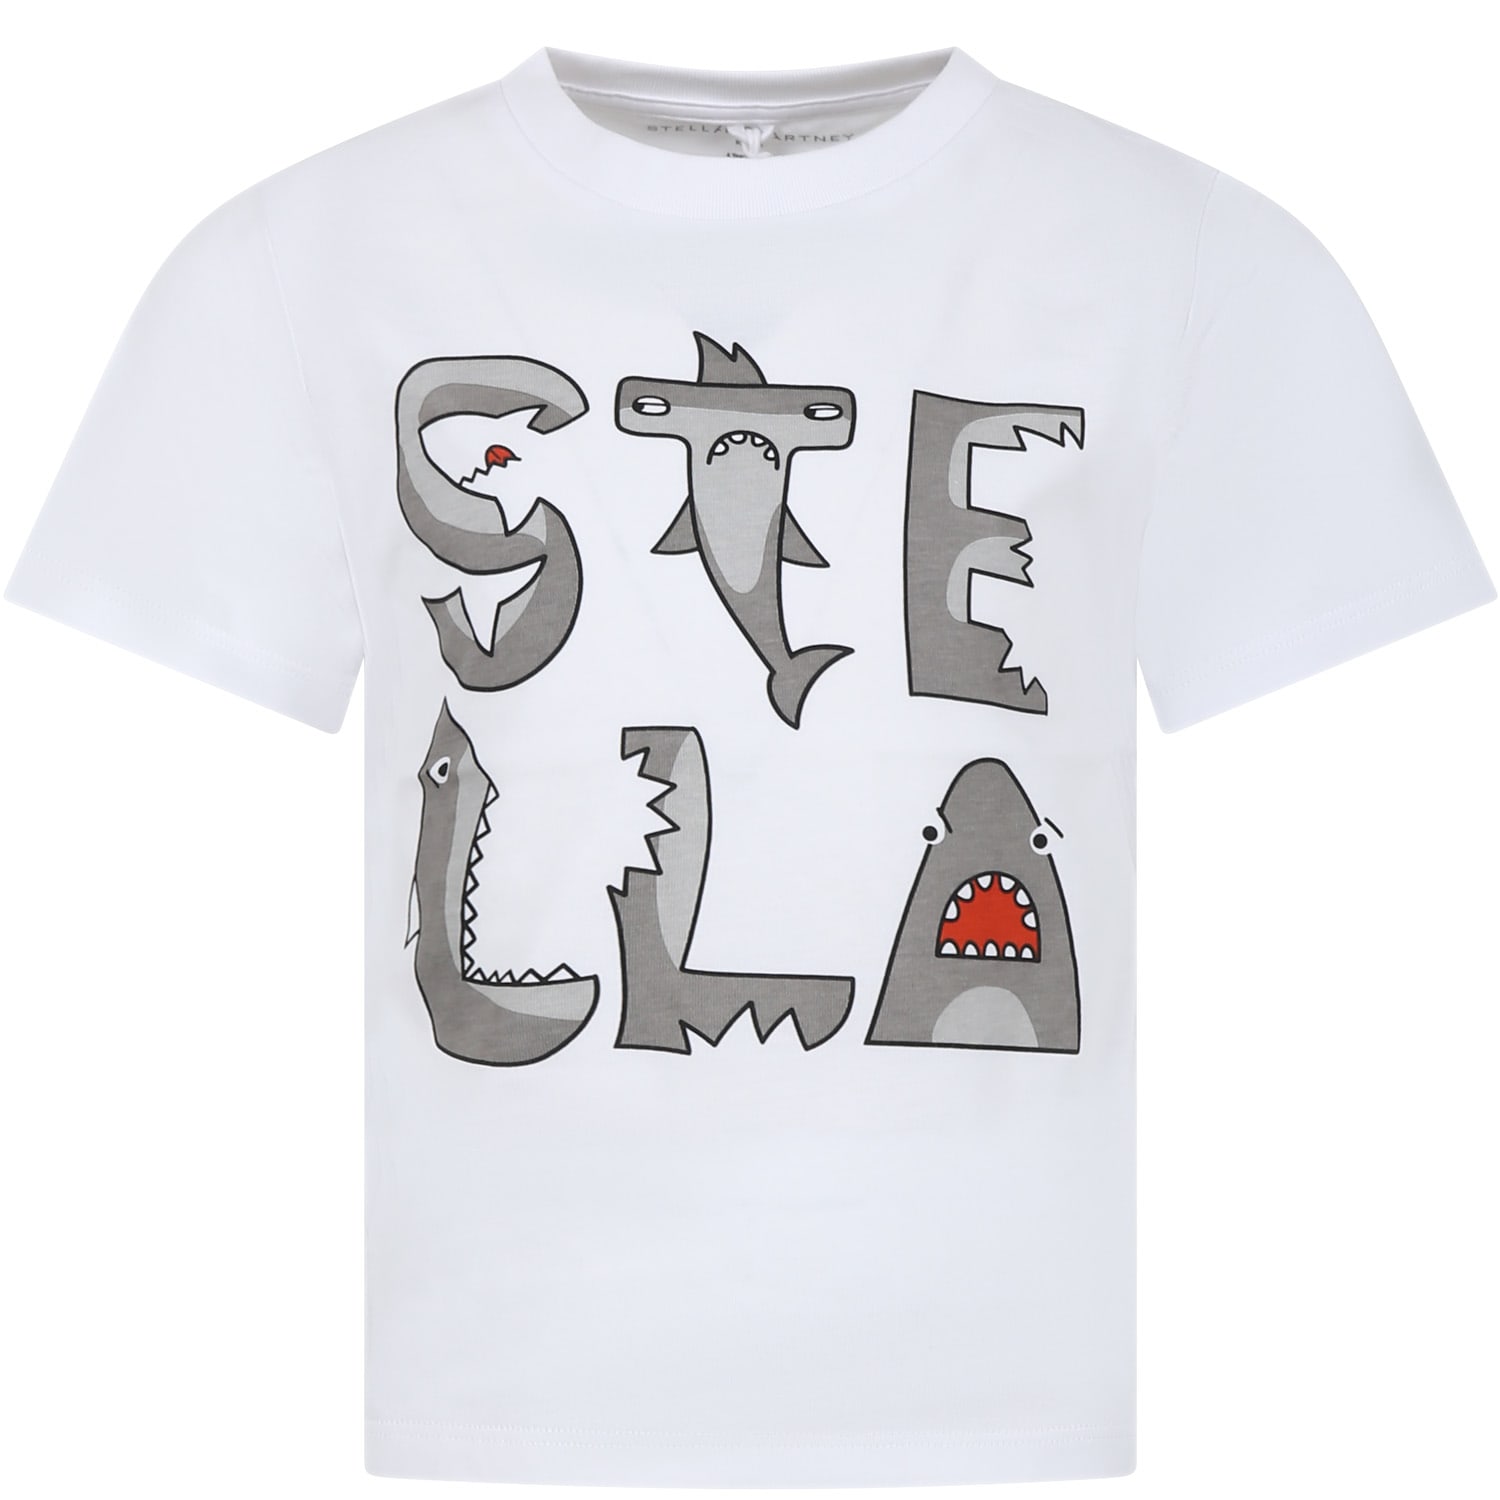 Stella McCartney White T-shirt For Boy With Print